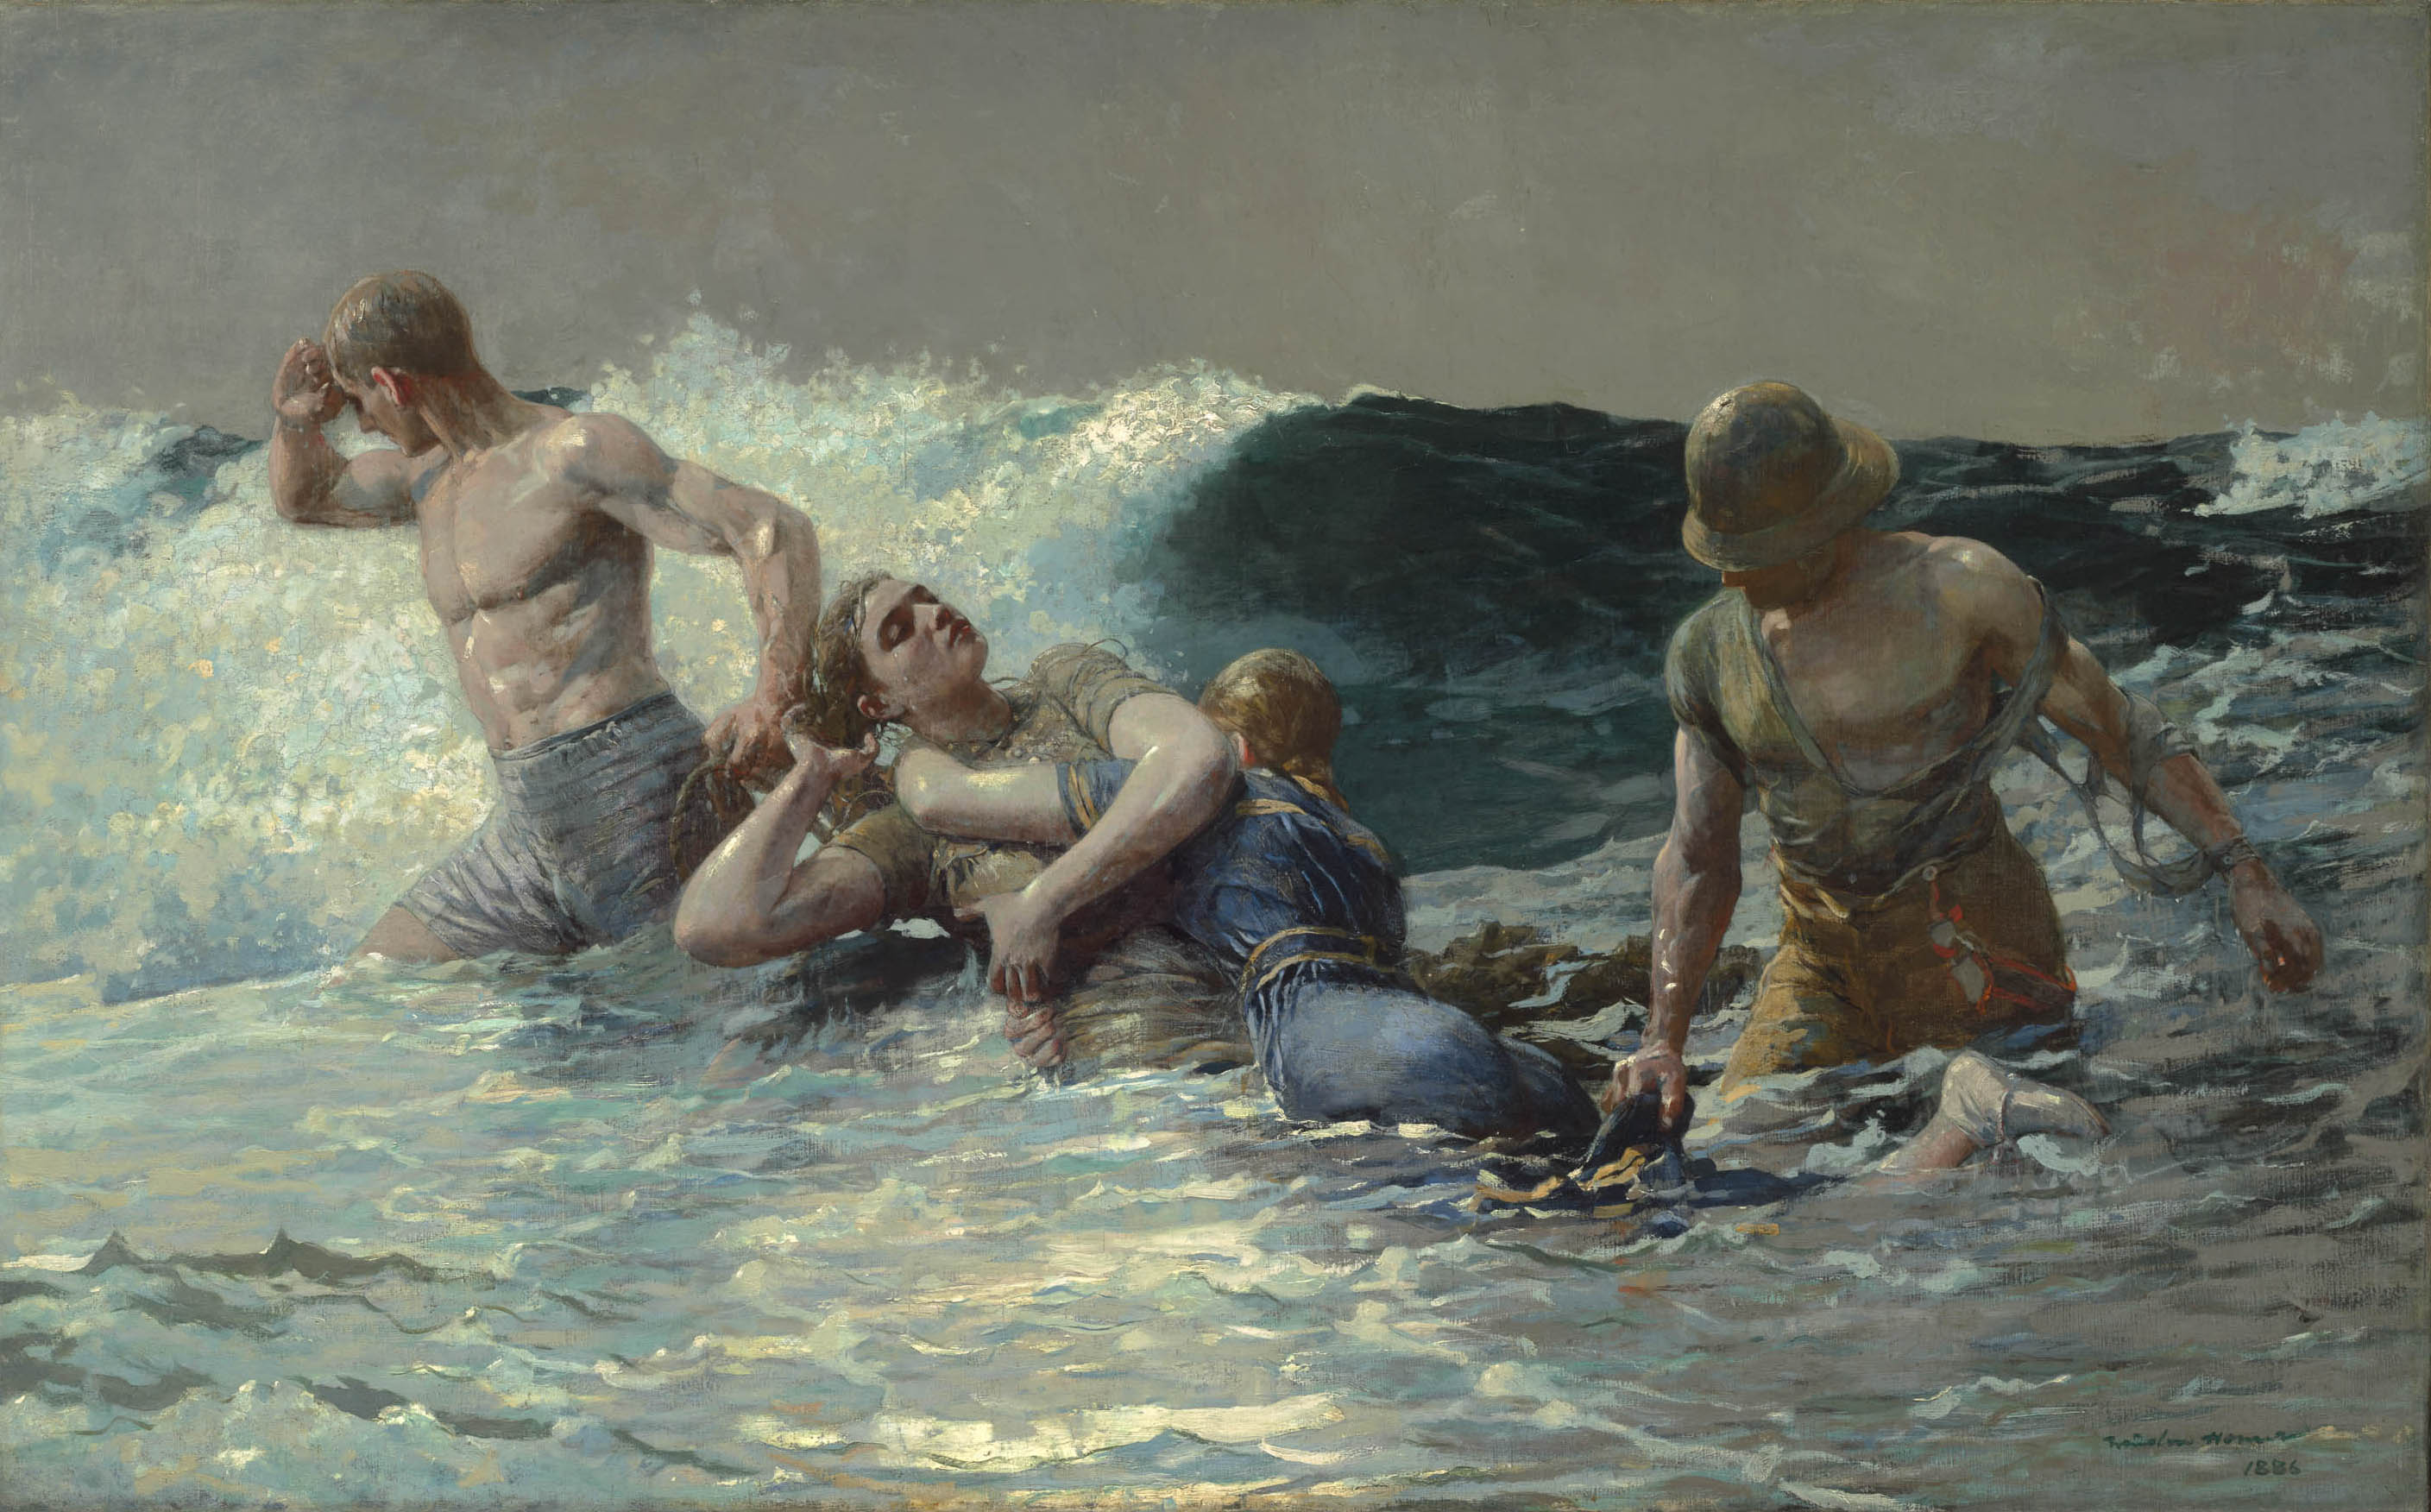 Undertow by Winslow Homer - 1886 - 75.7 x 121 cm The Clark